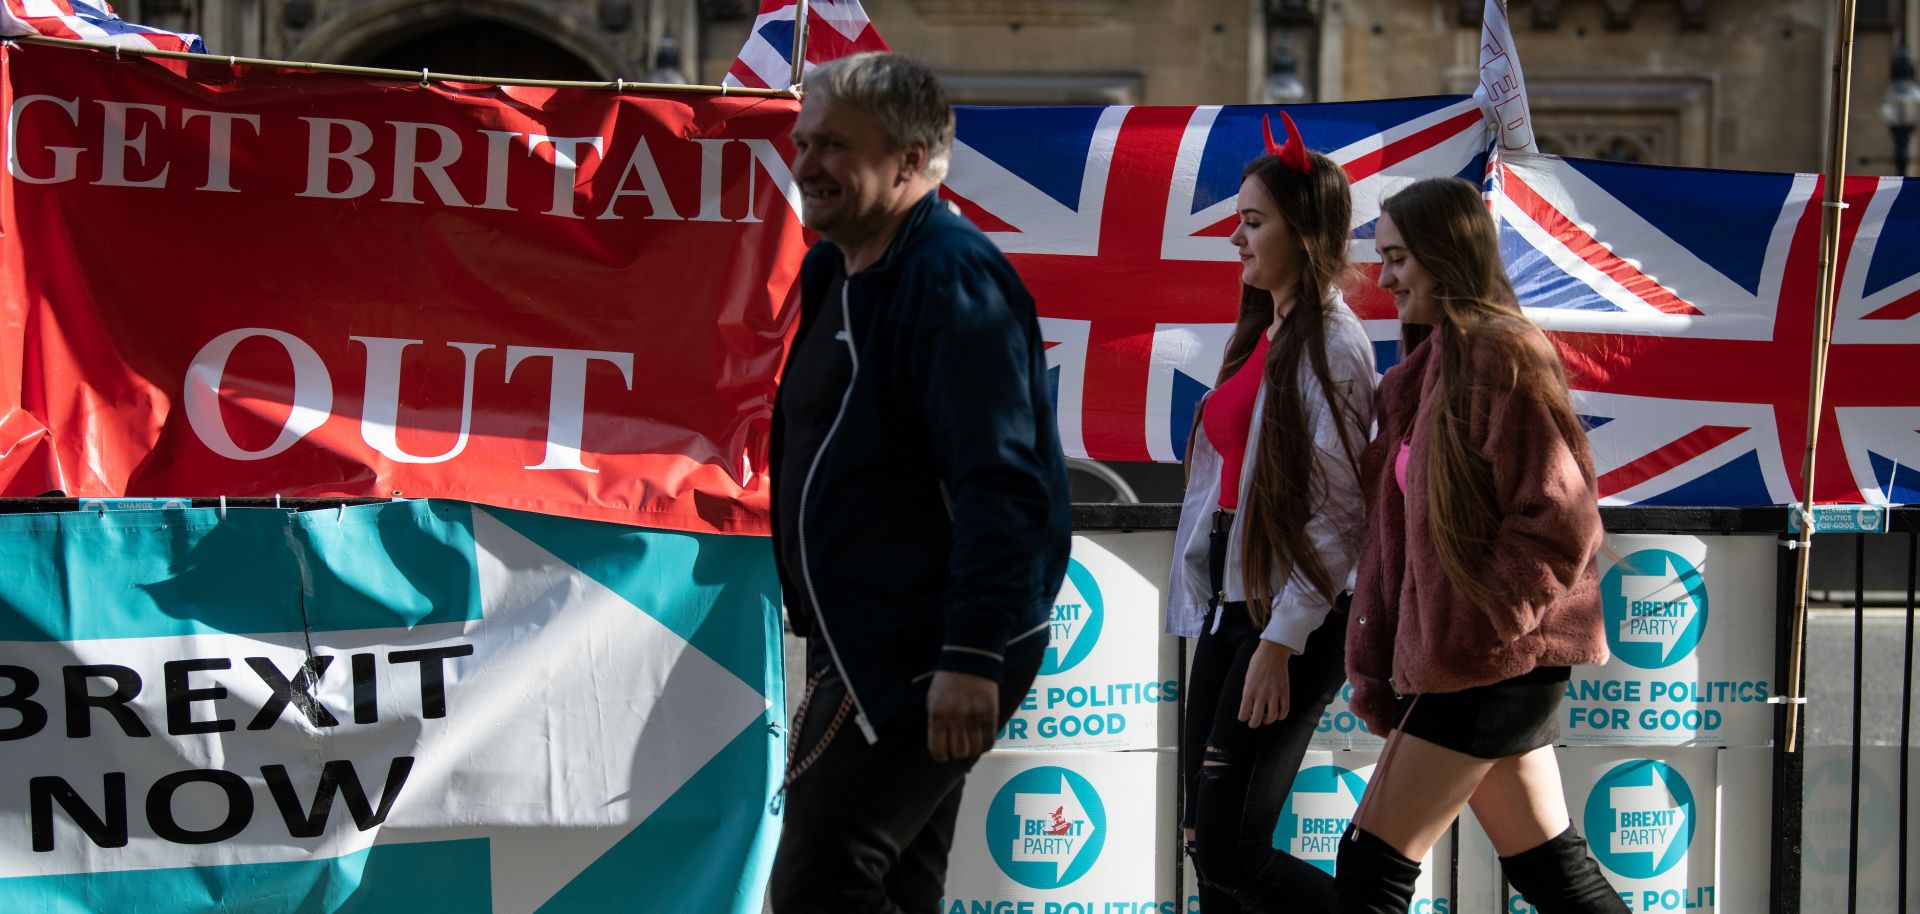 Pedestrians near the British Parliament building pass banners touting Brexit.